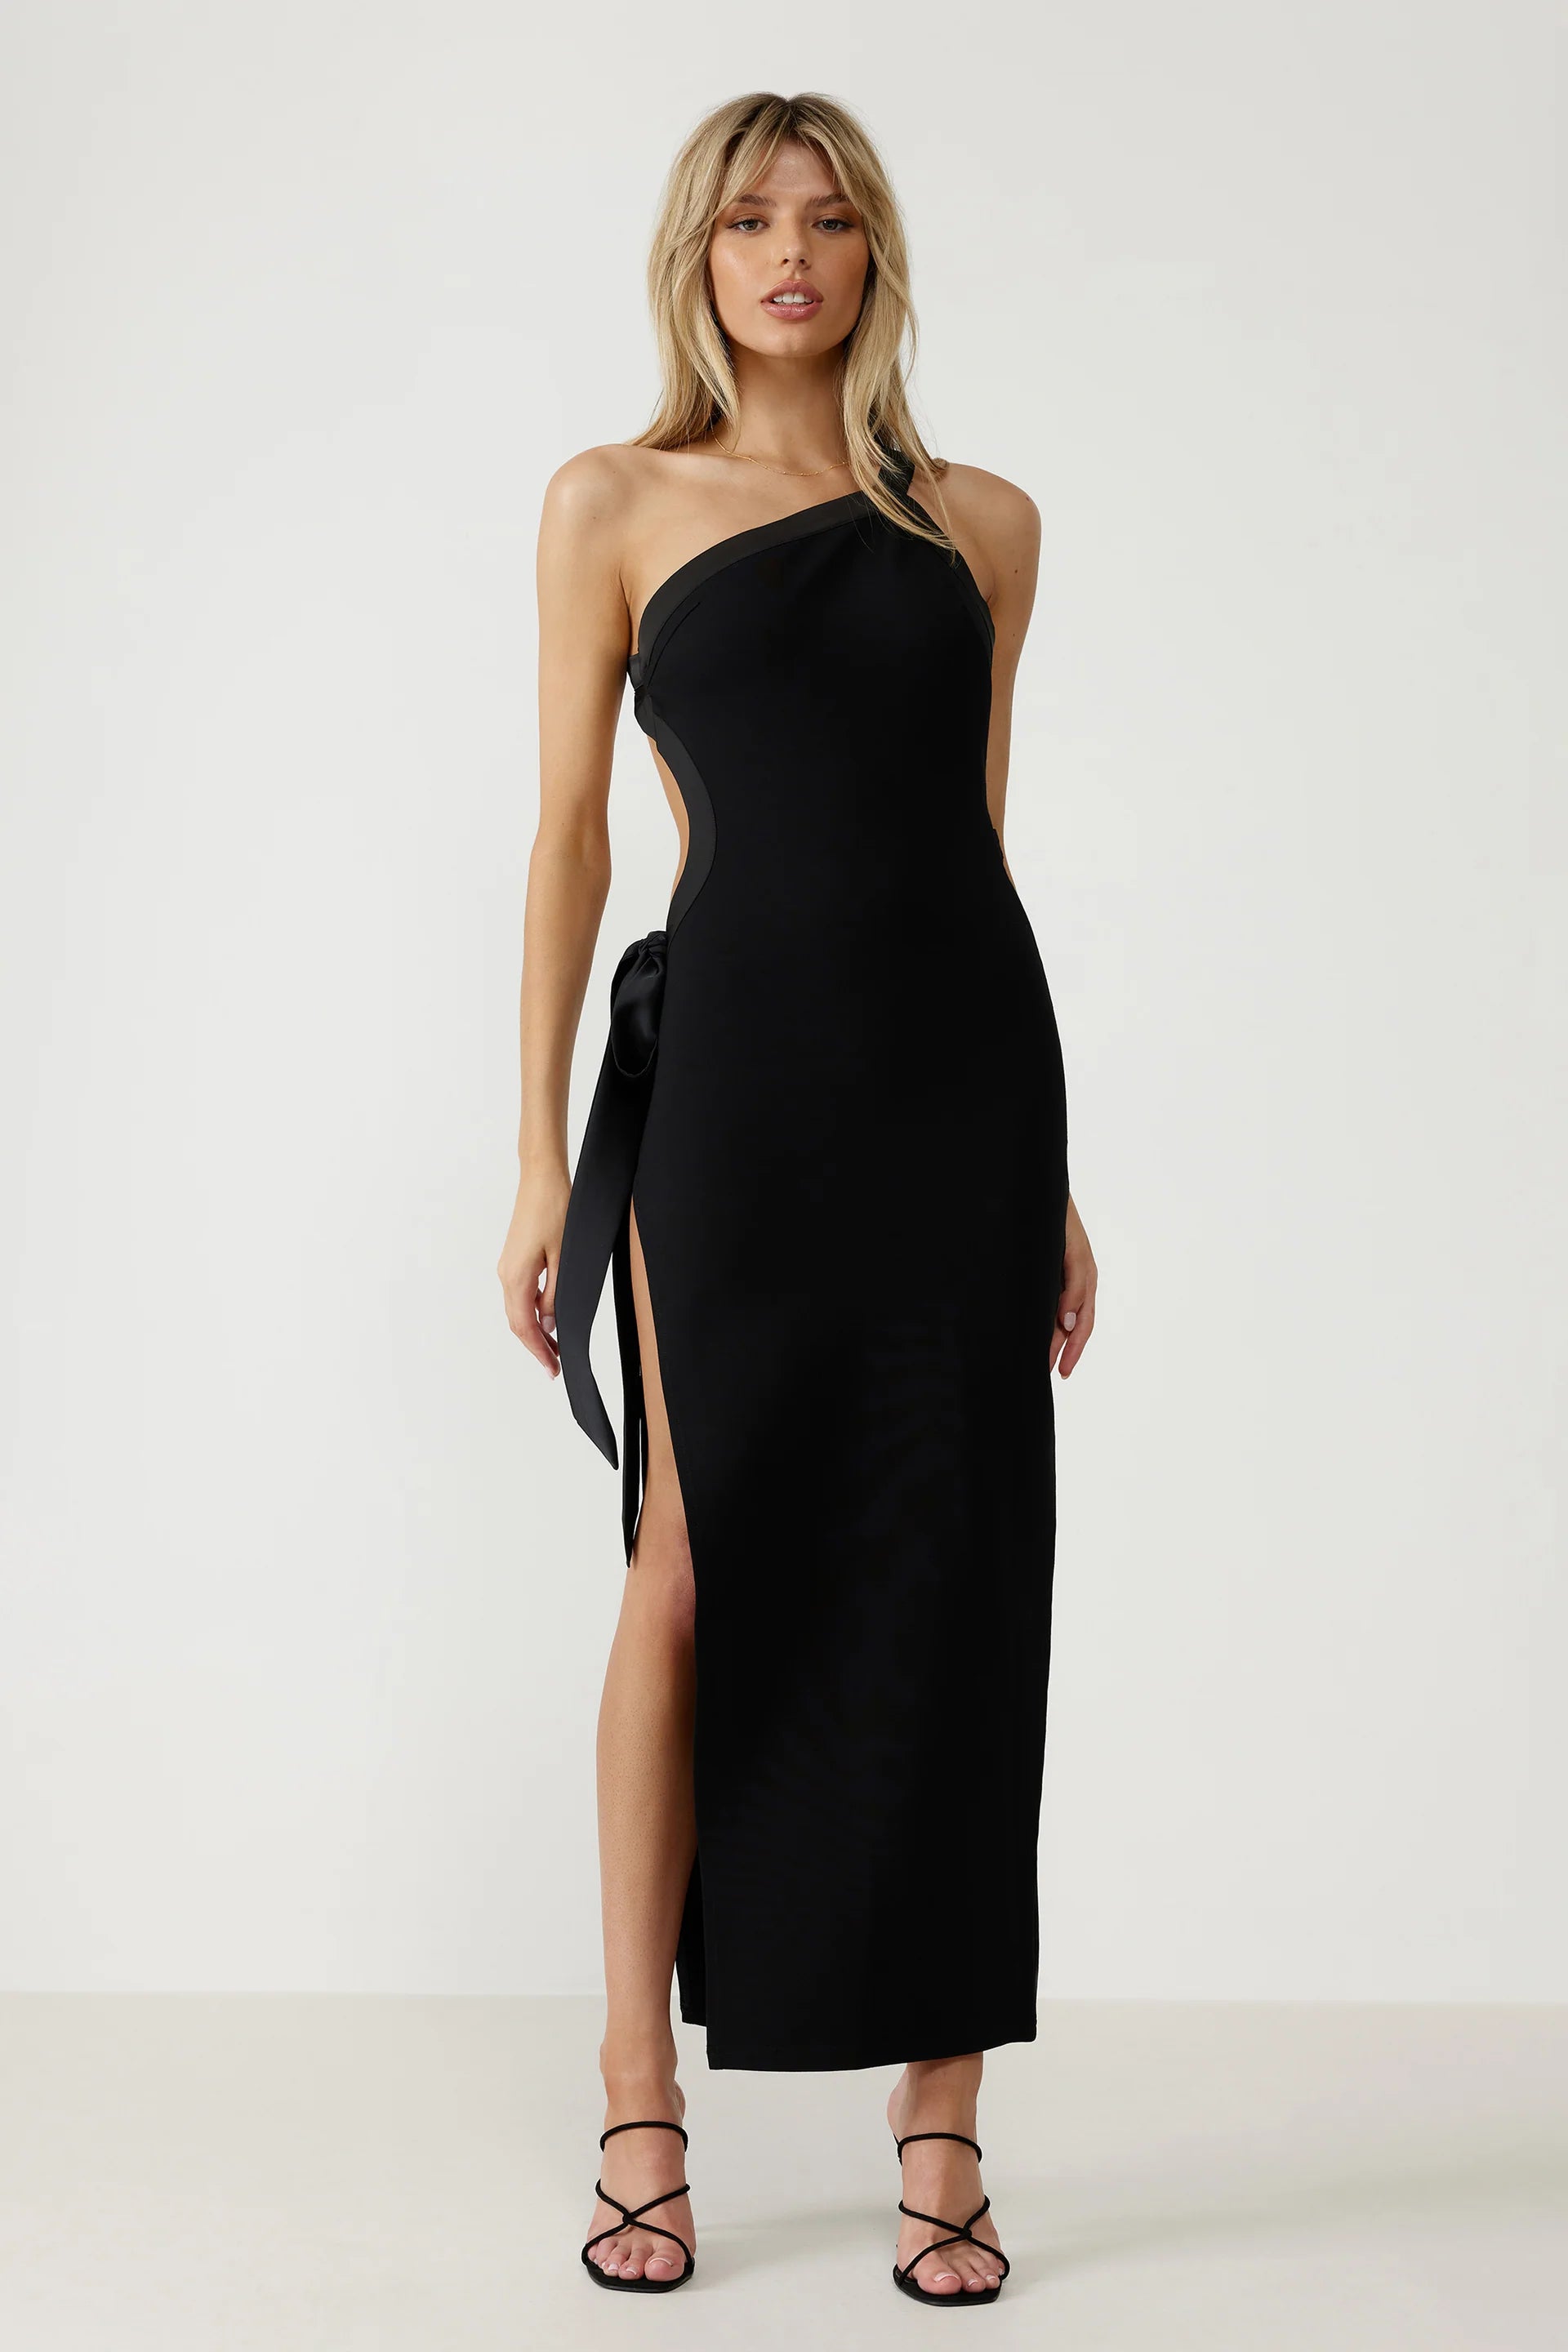 LEXI Imogen Dress (Black) - RRP $379